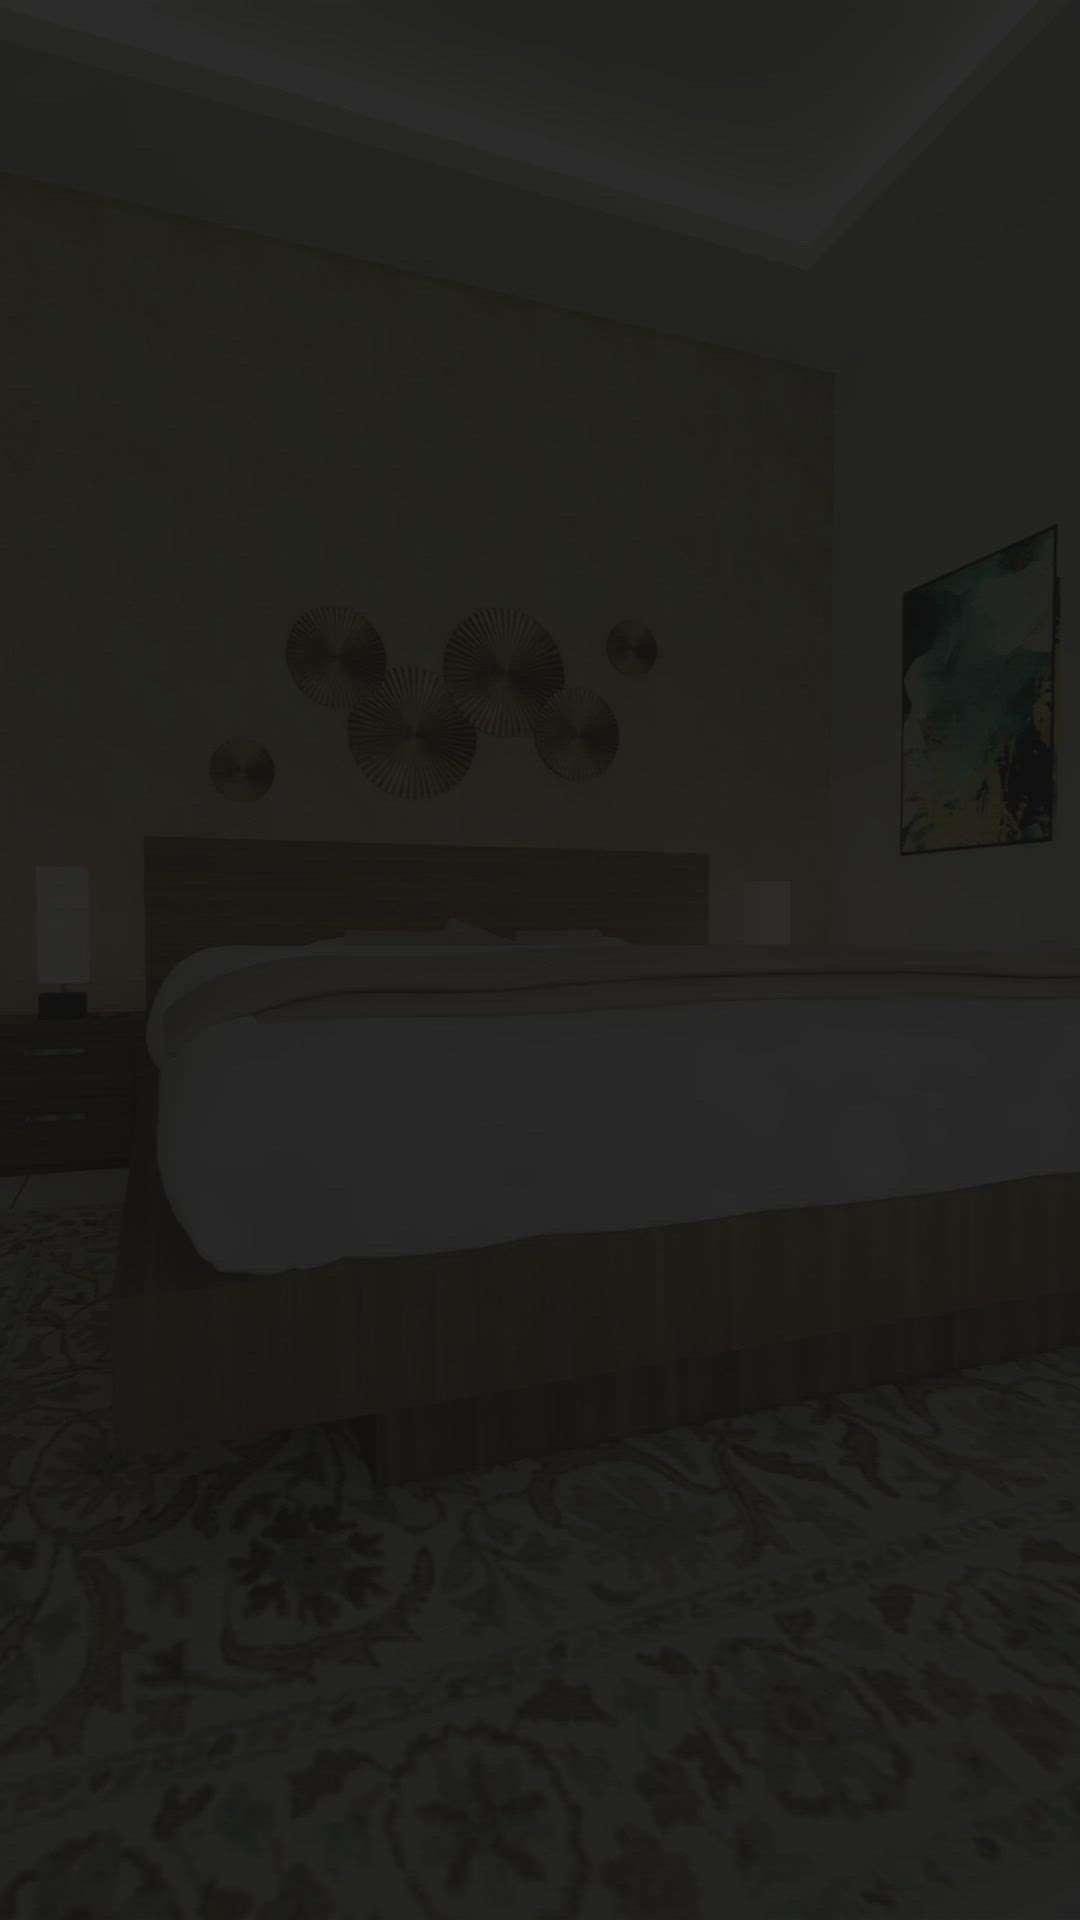 #BedroomDecor #marineply #wallpaperrolles #asianpaint #keralastyle #MasterBedroom #WardrobeIdeas